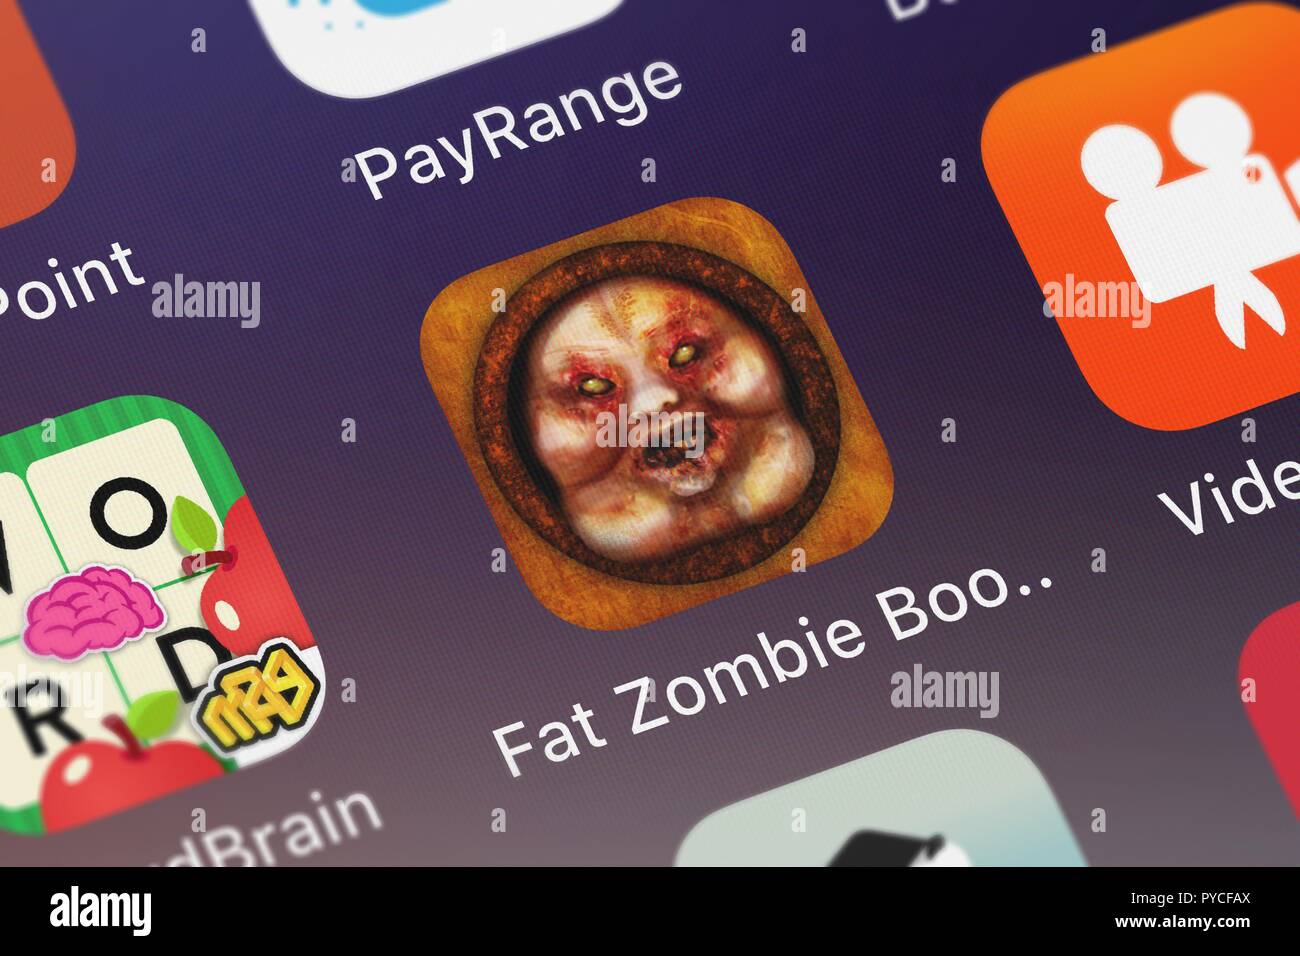 London, United Kingdom - October 26, 2018: Close-up shot of Pop-ok.com's popular app Fat Zombie Booth Lite. Stock Photo